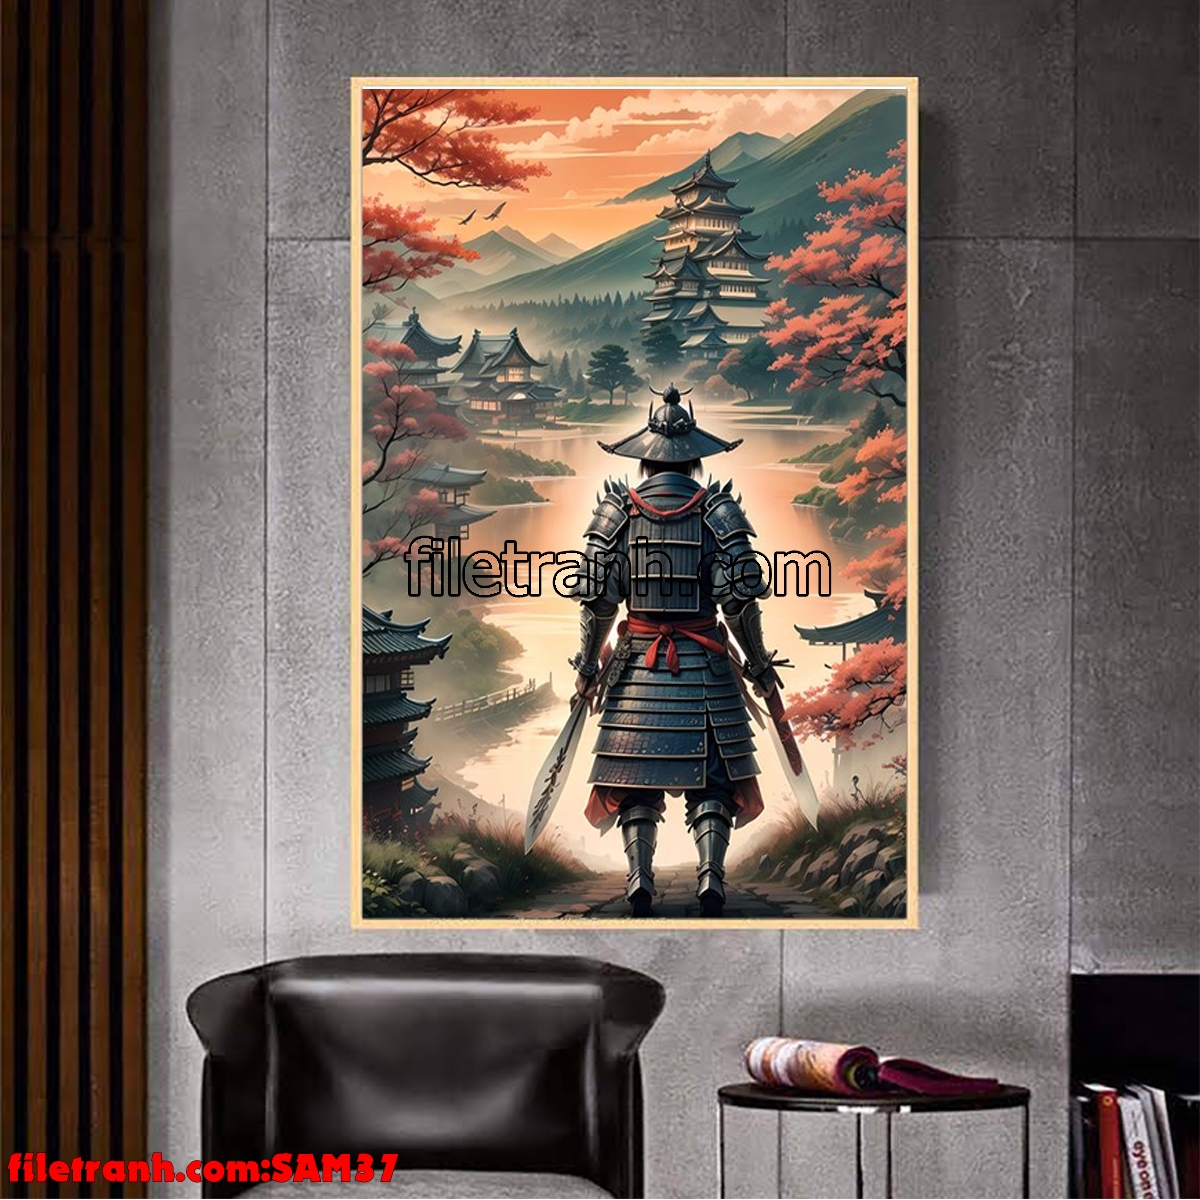 https://filetranh.com/tuong-nen/file-tranh-samurai-vo-si-nhat-ban-sam37.html